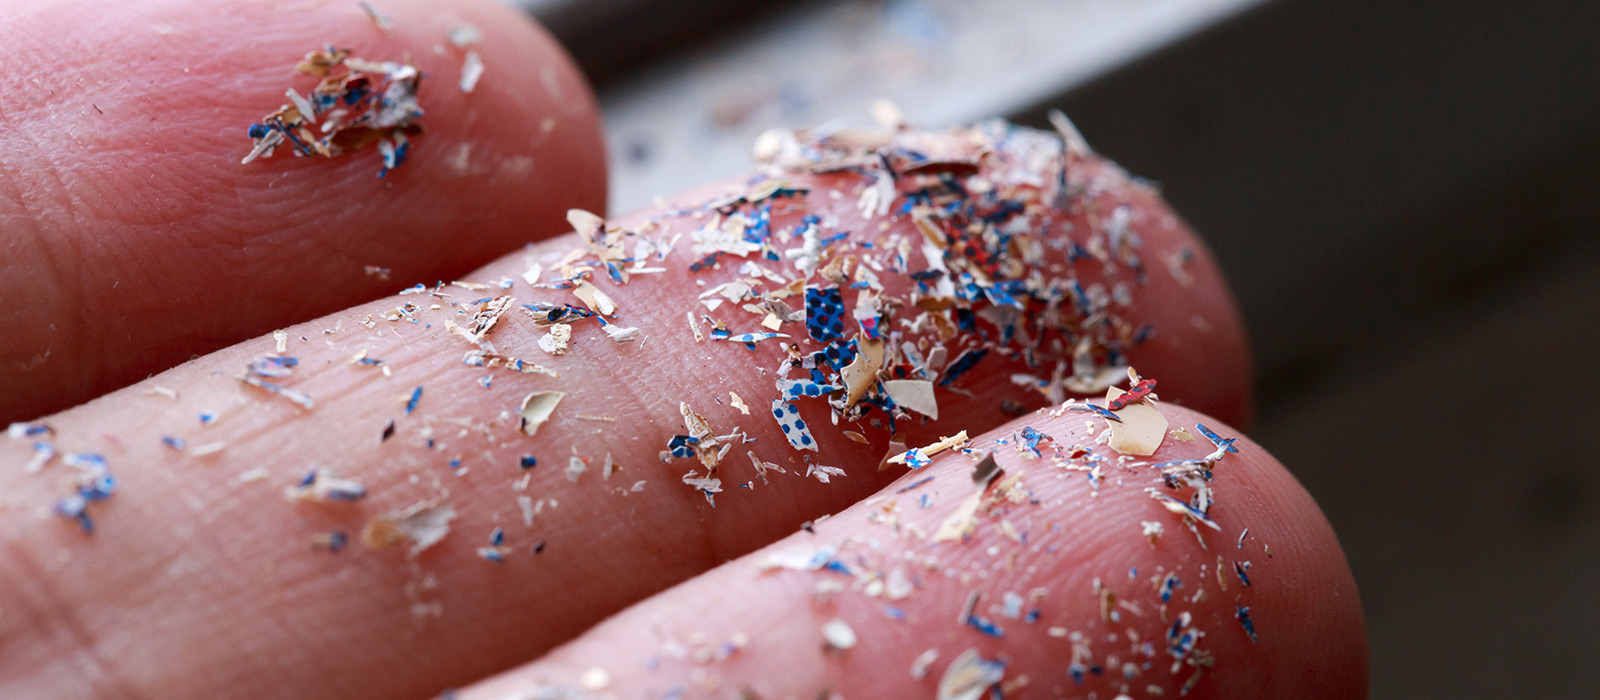 Microplastics seen on fingertips